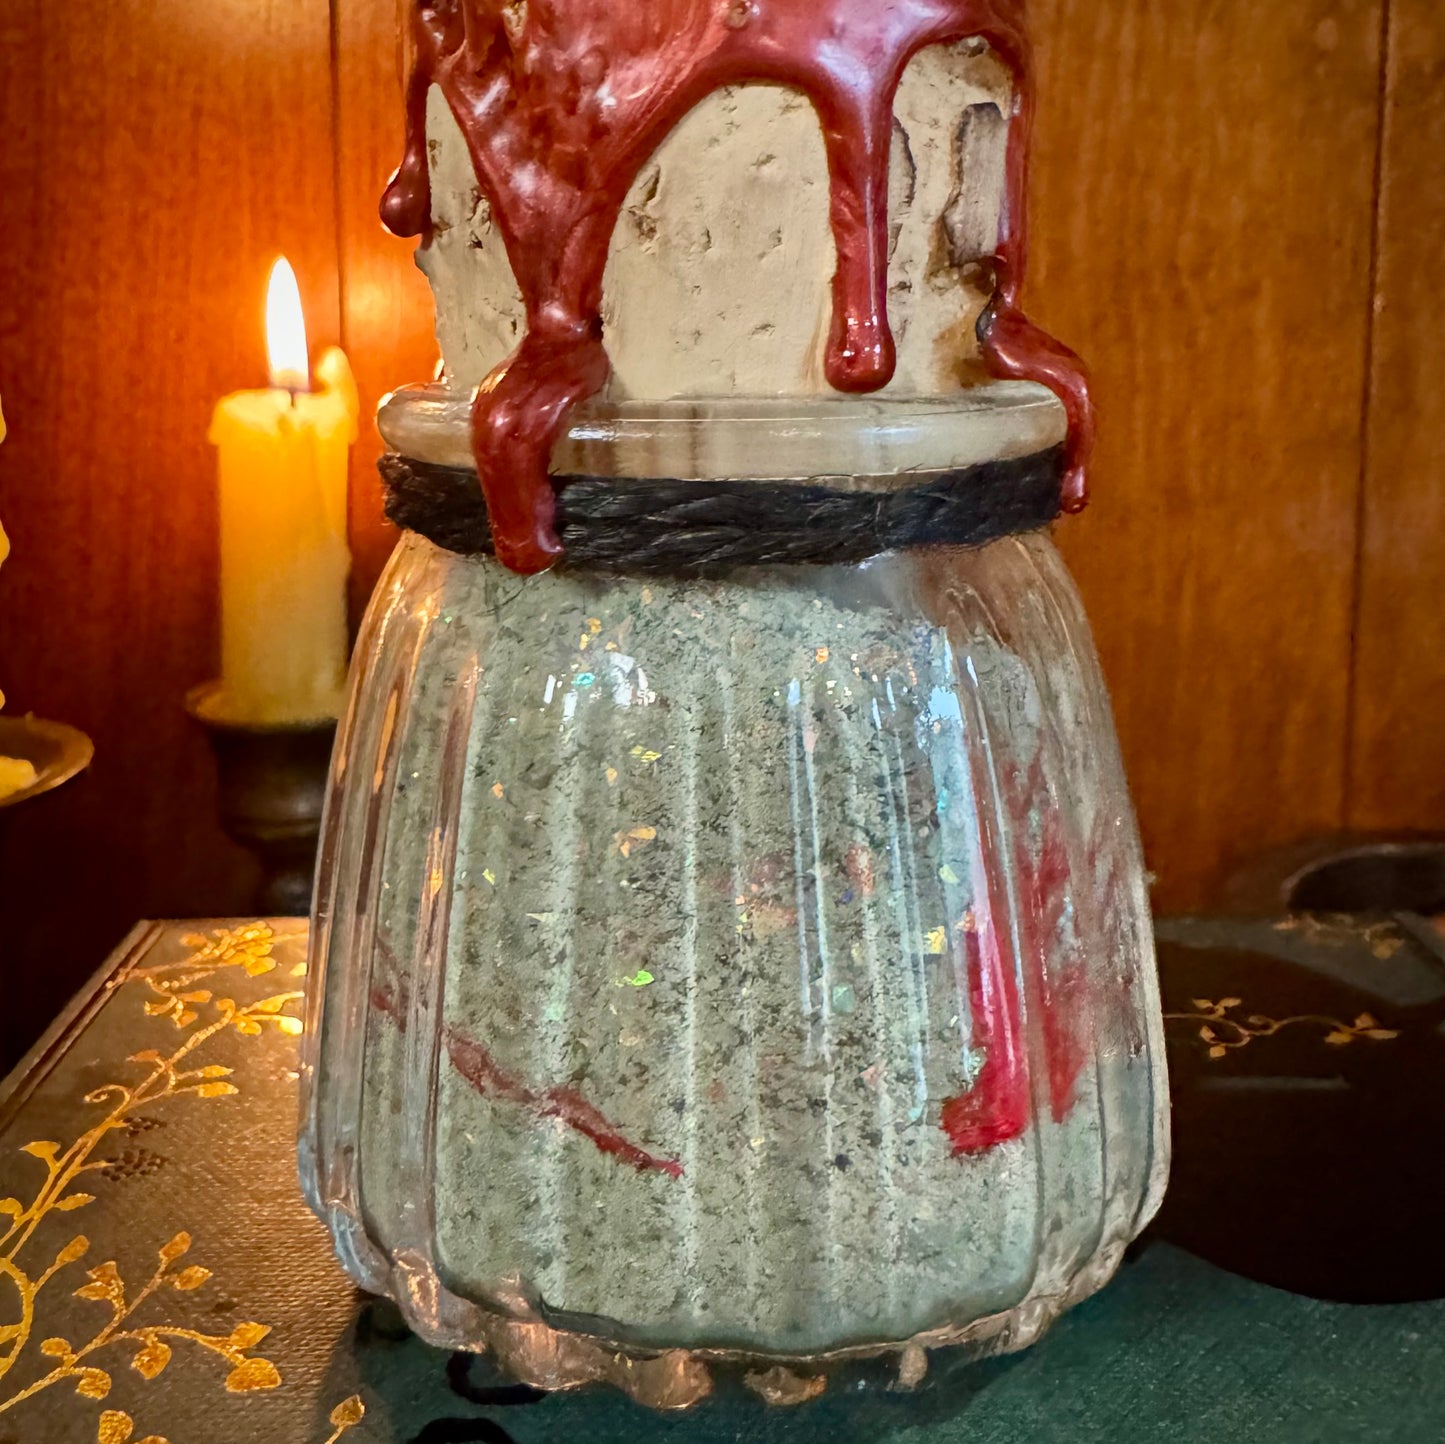 Phoenix Ashes, A Fantasy Apothecary Jar